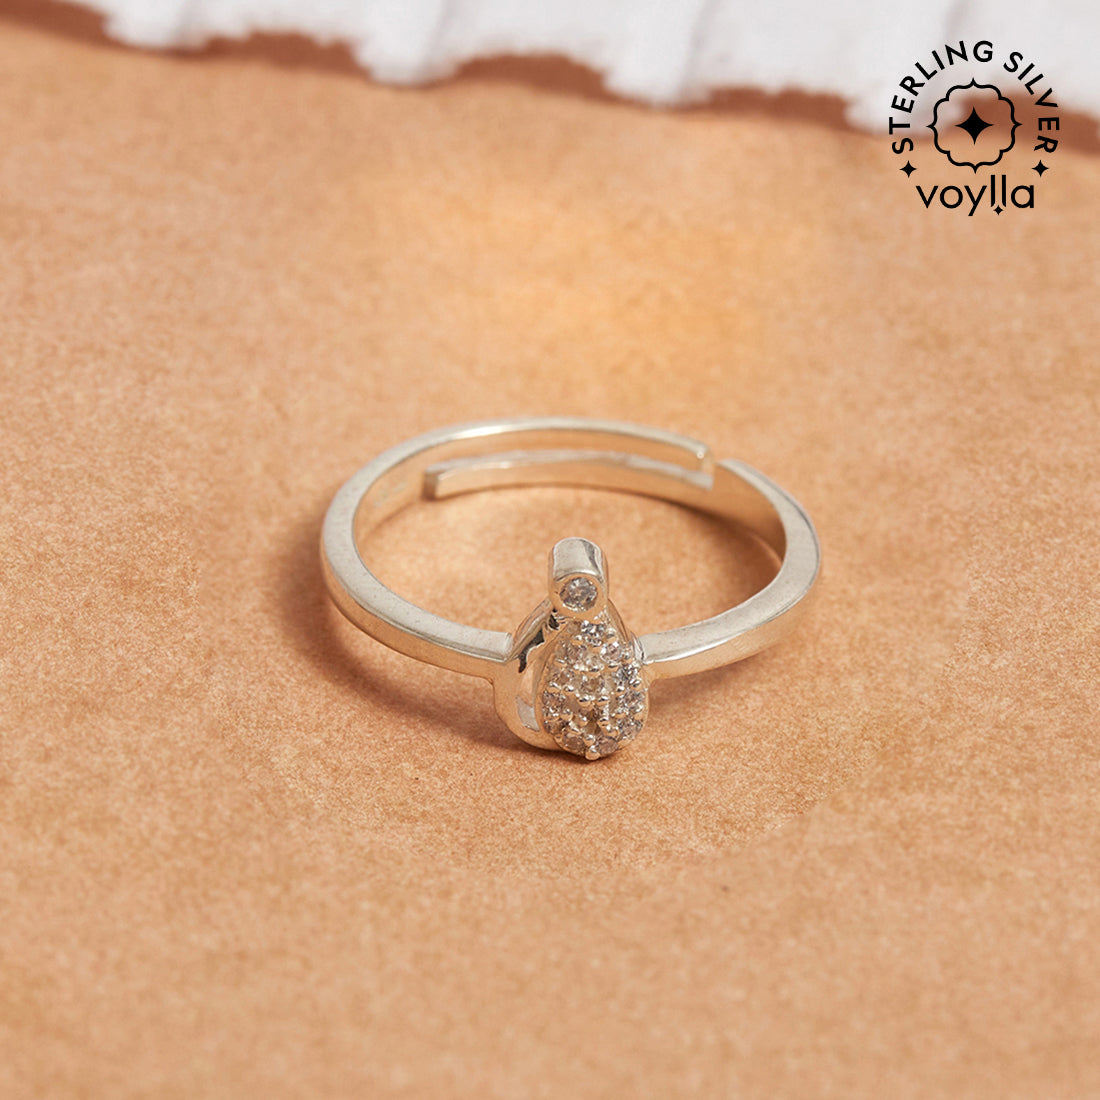 Buy quality Silver 92.5 Fancy Diamond Heart Shape Ring in Ahmedabad